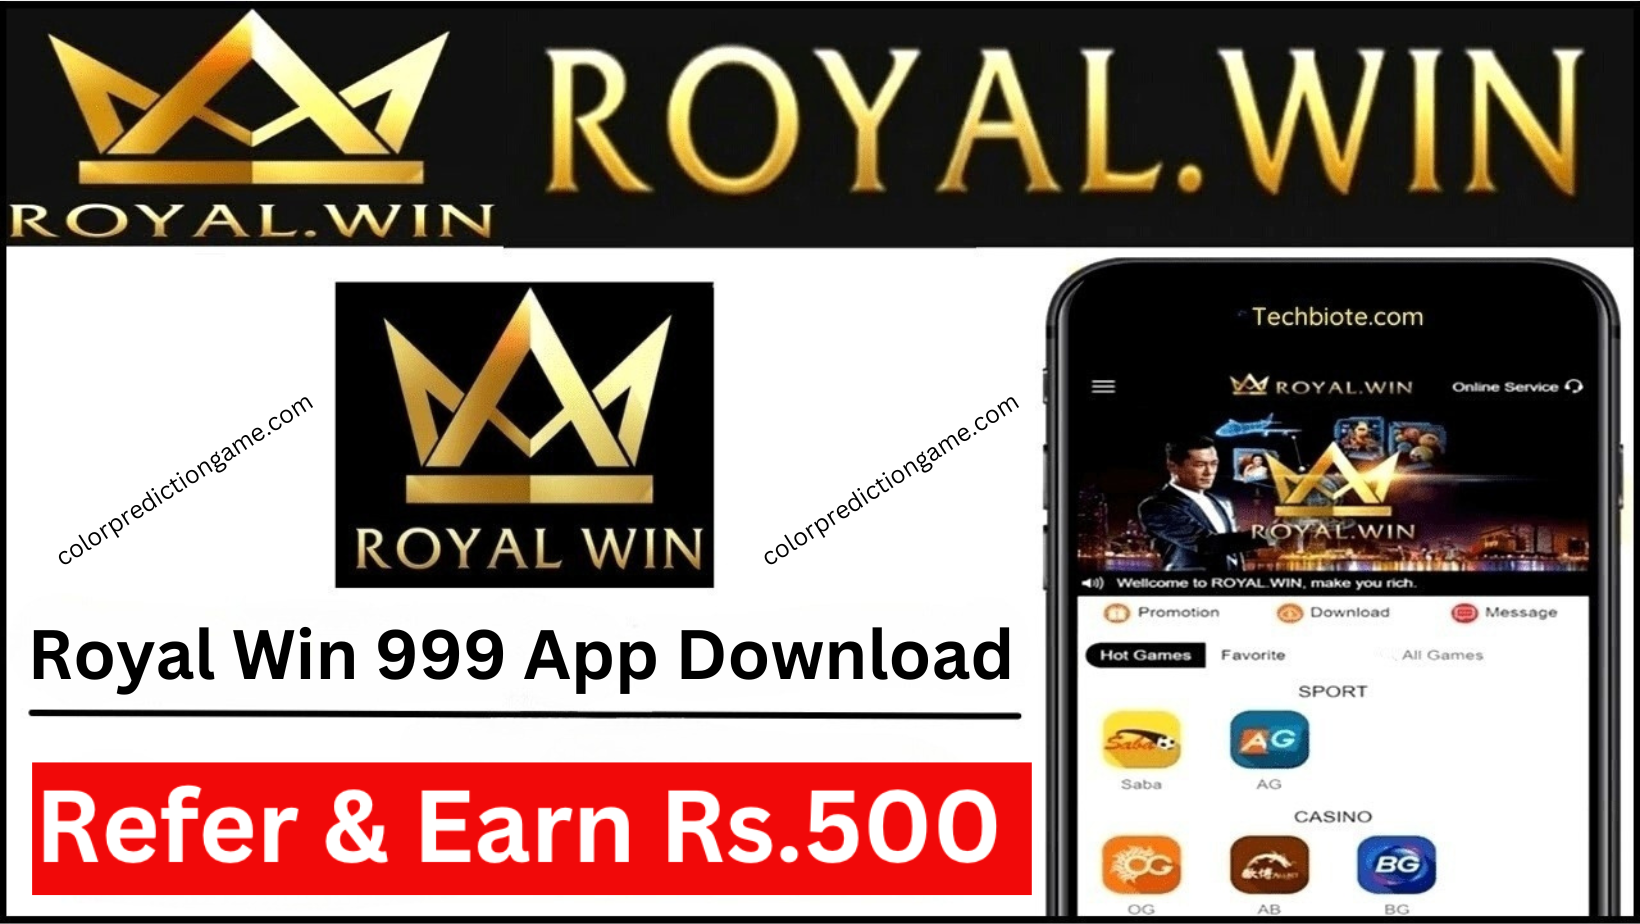 Royal Win 999 App